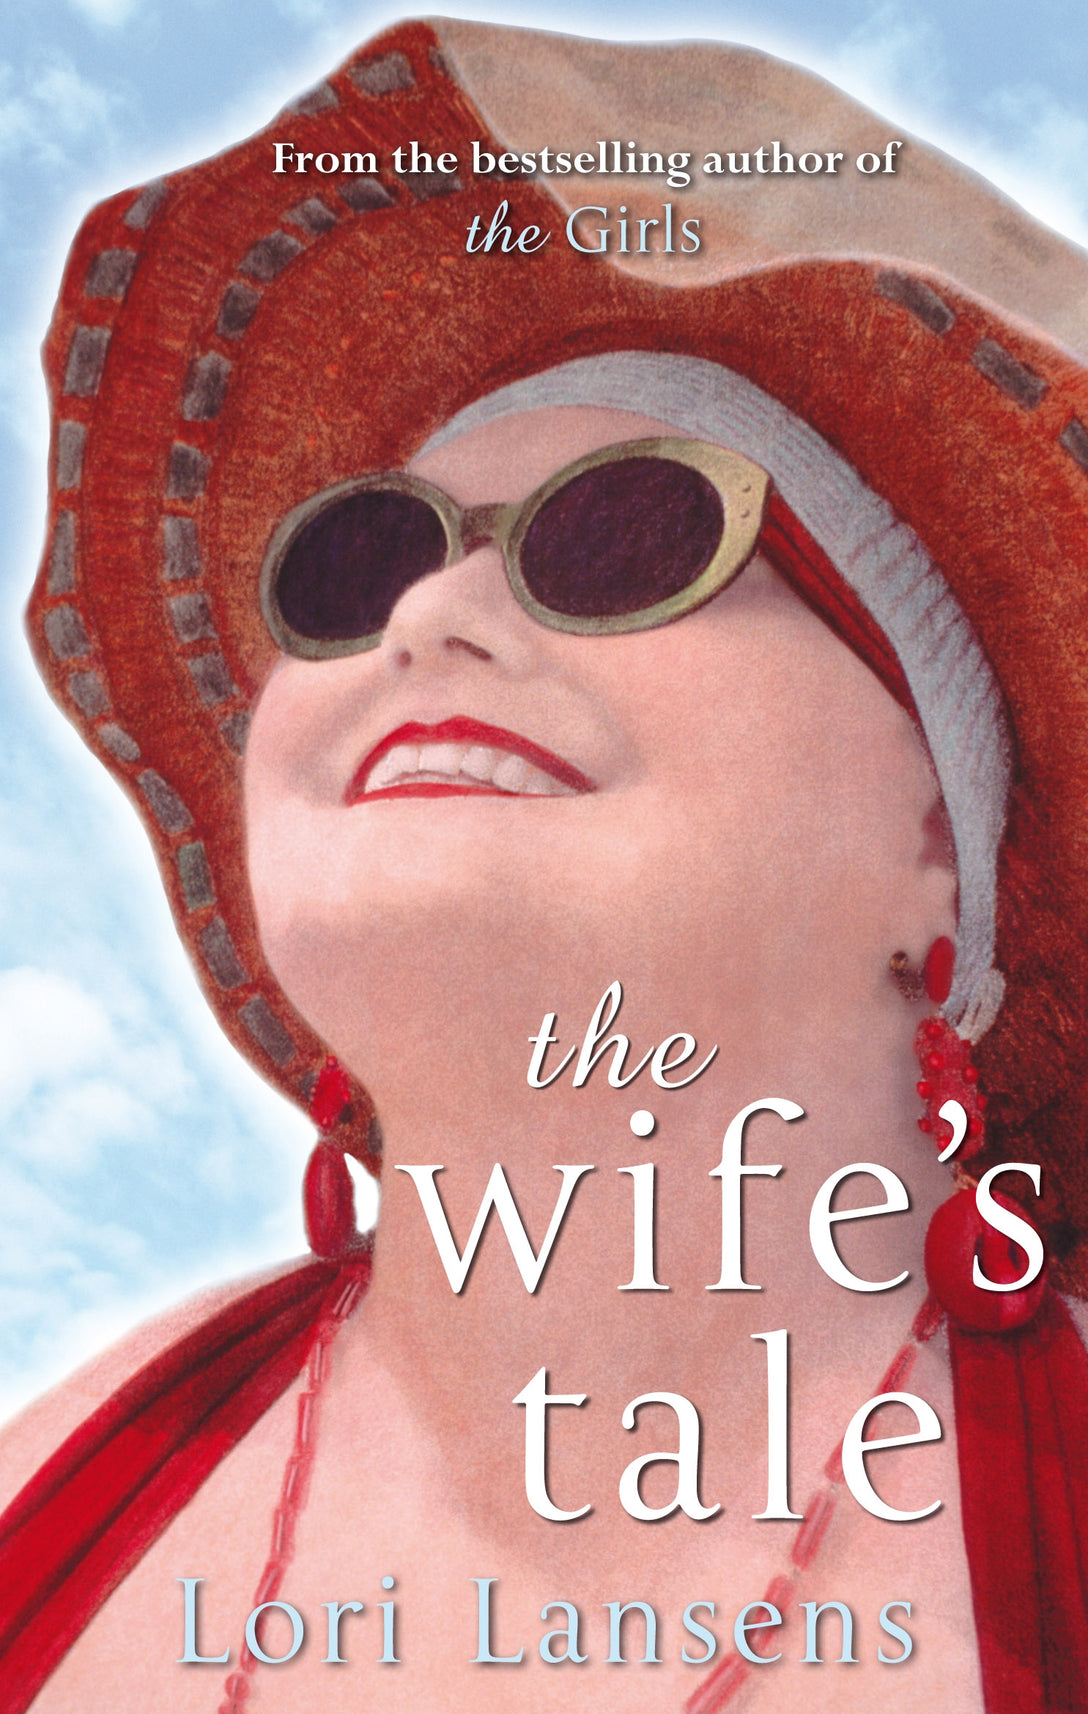 The Wife's Tale by Lori Lansens